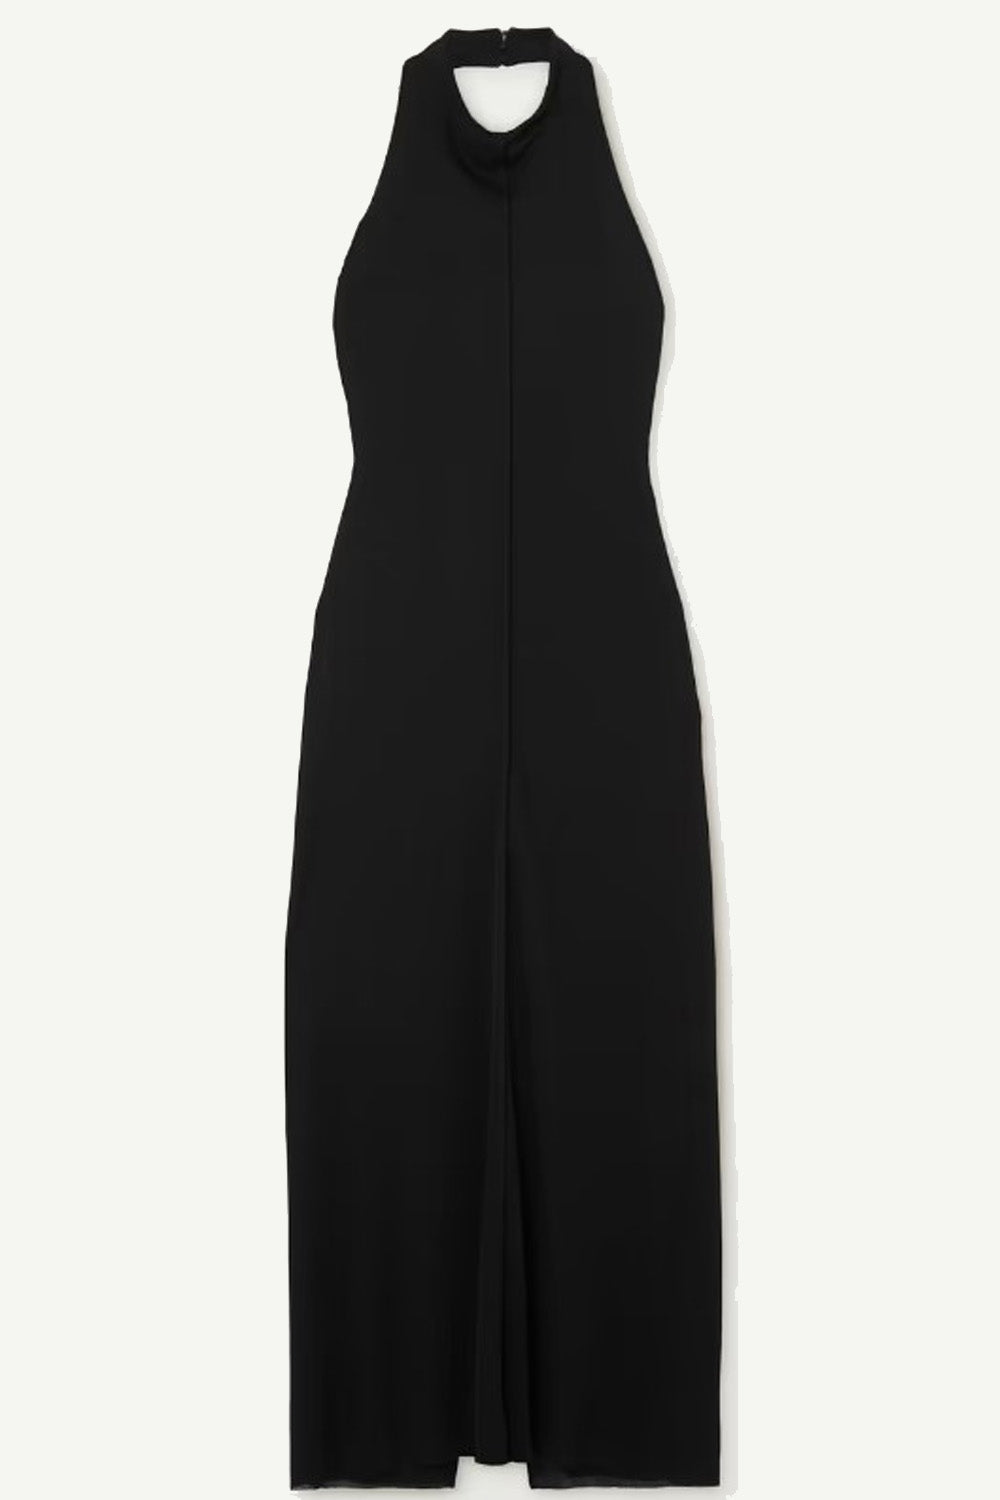 Azure Black Dress